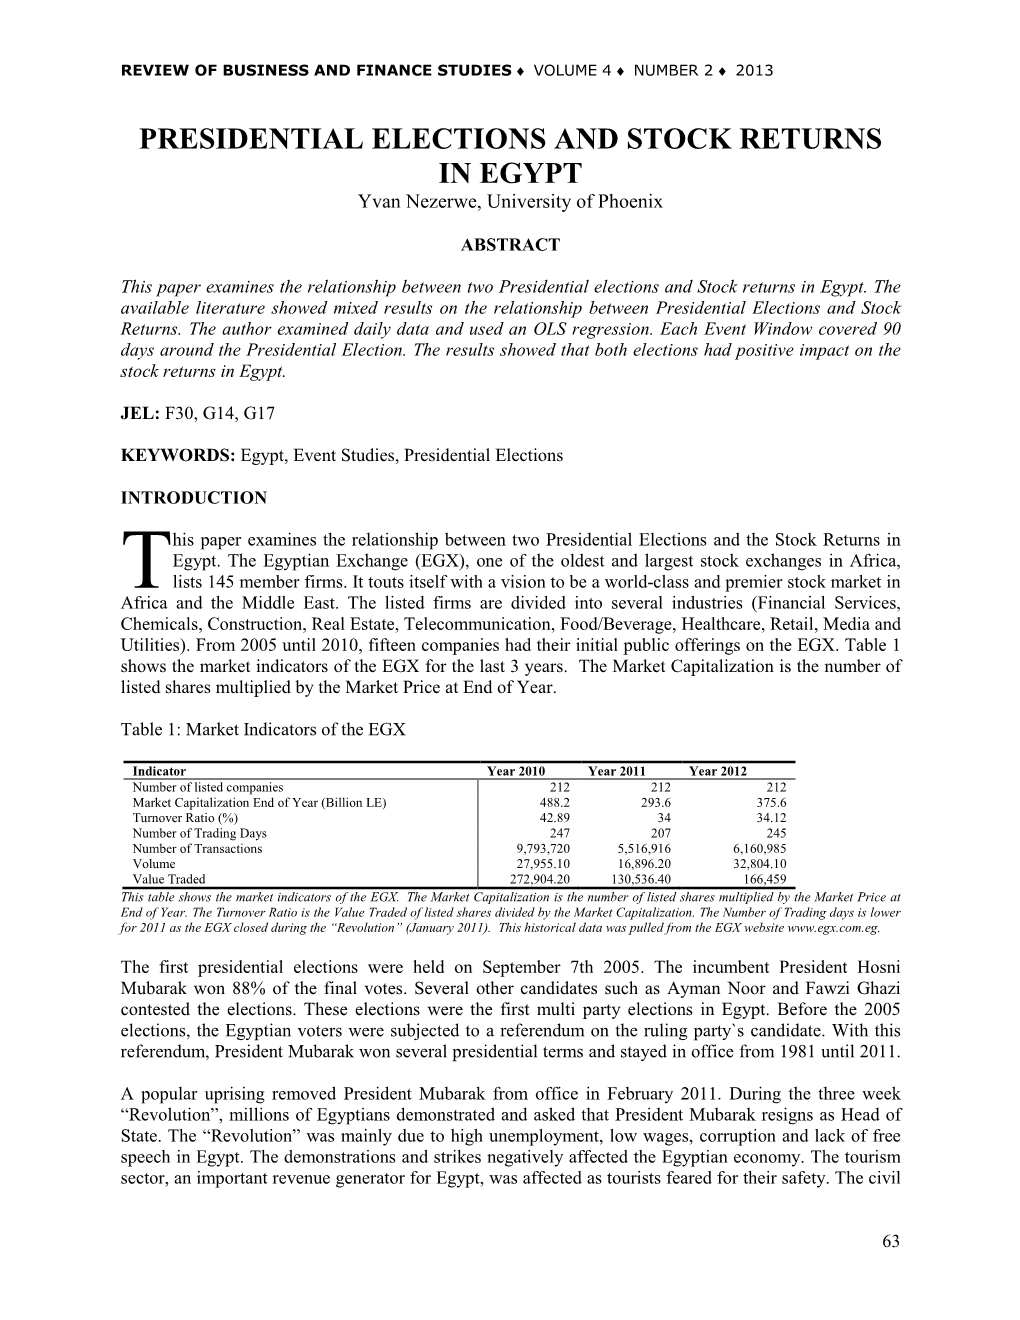 PRESIDENTIAL ELECTIONS and STOCK RETURNS in EGYPT Yvan Nezerwe, University of Phoenix